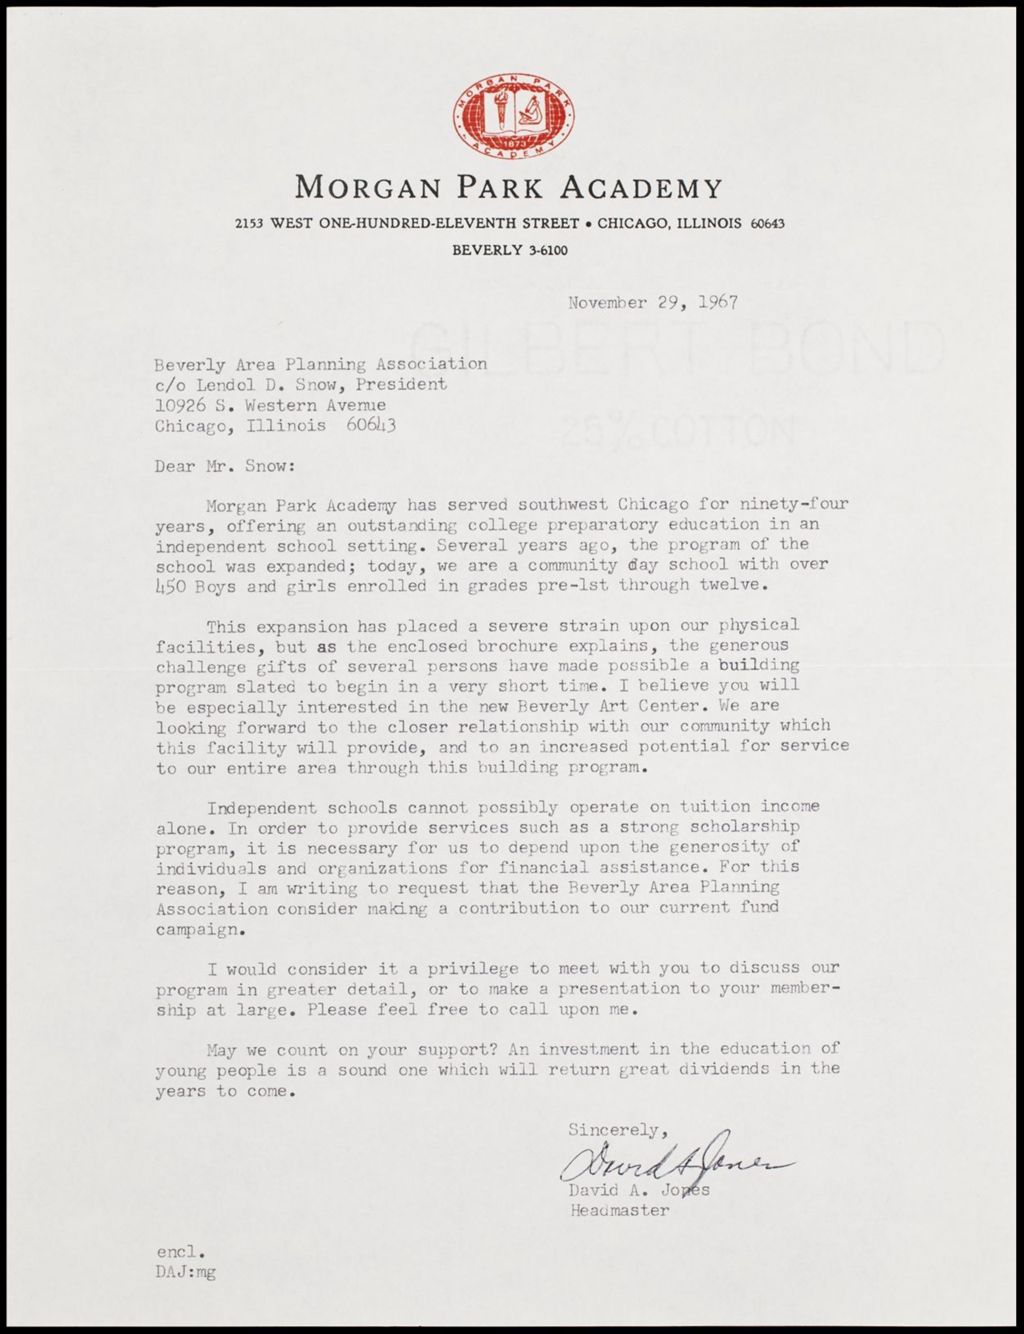 Miniature of Morgan Park Academy (Folder 141)